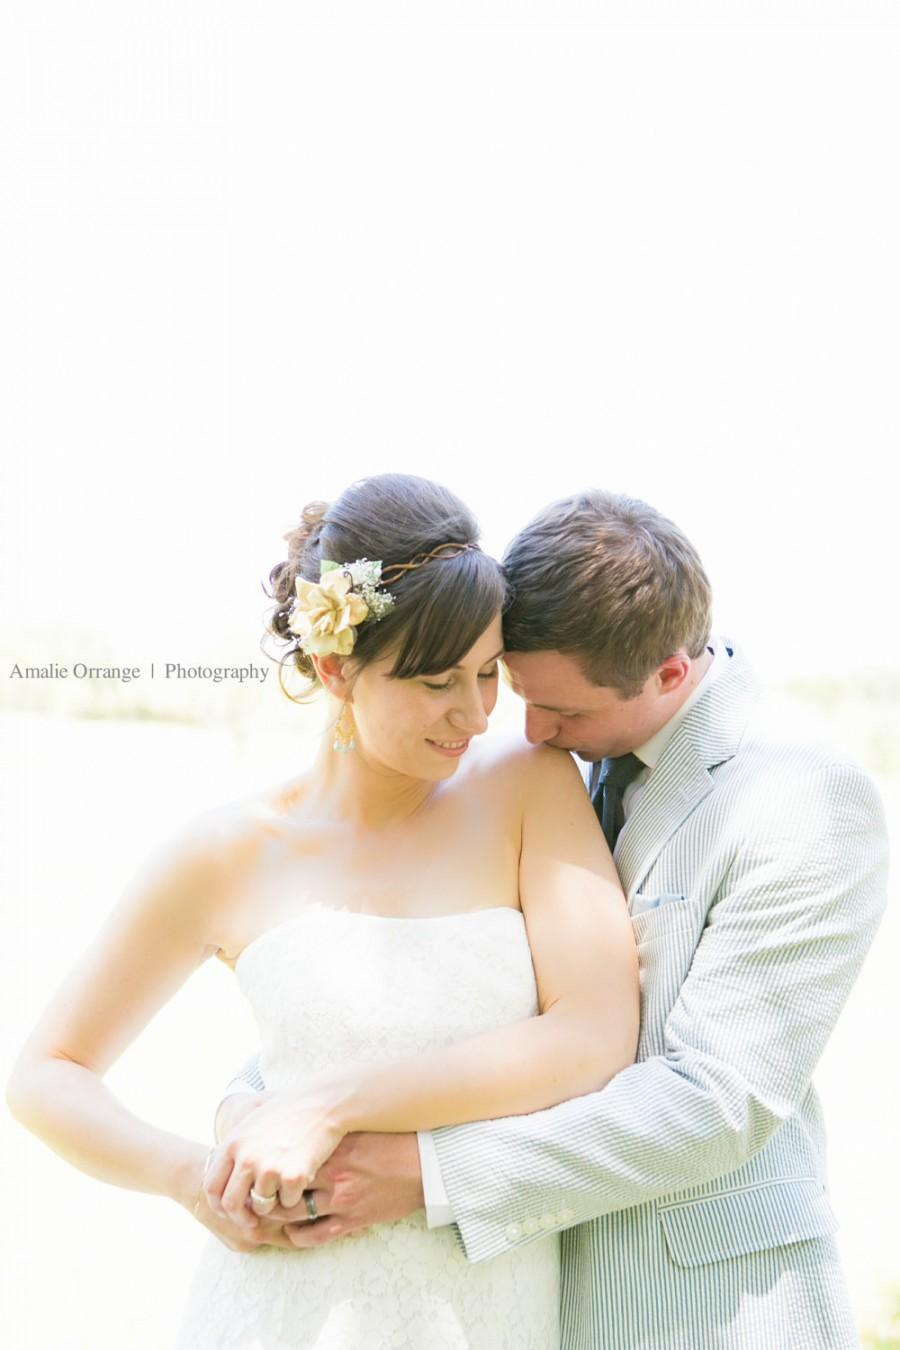 Wedding - bridal headpiece, natural pine cone rose floral hair crown 'Take my breath away'